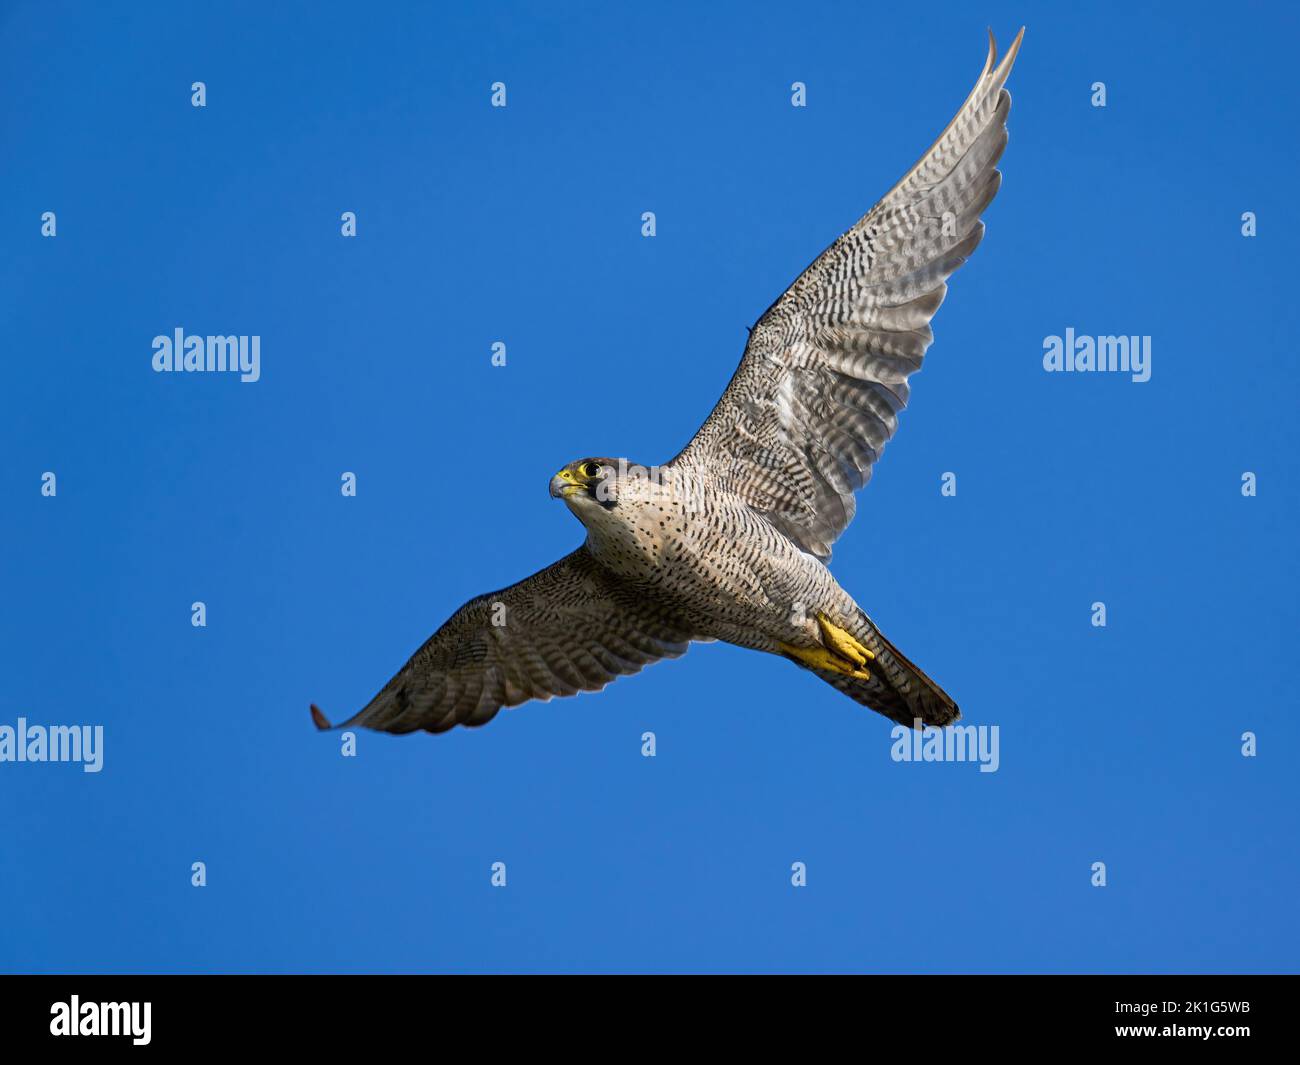 Peregrine falcon (Falco peregrinus) in its natural environment Stock Photo